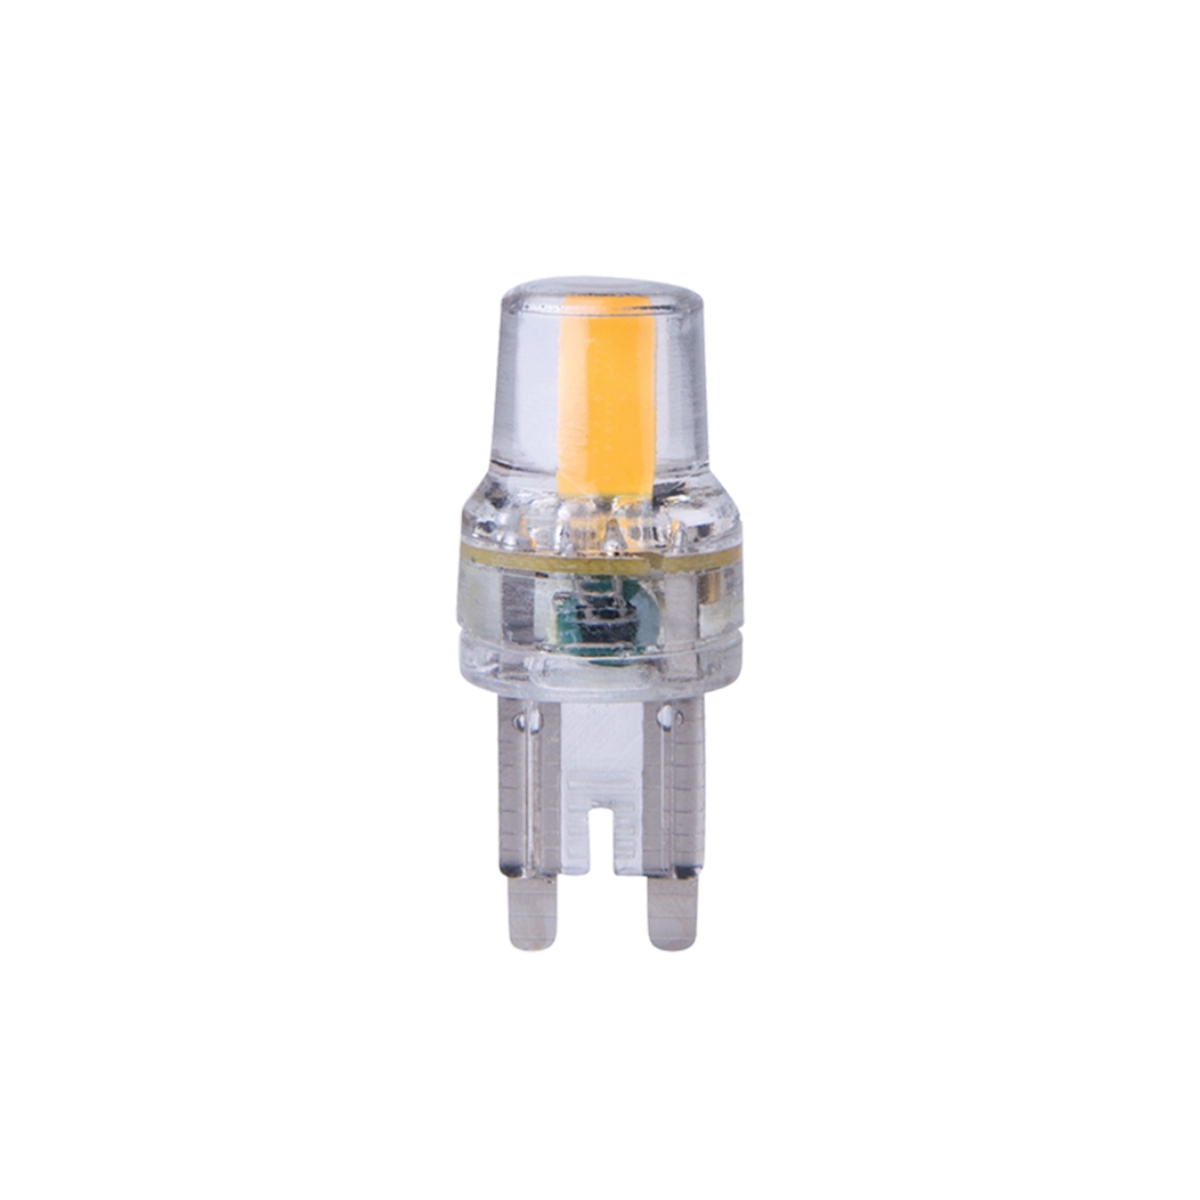 Lamp LED G9 Pin Type Bulb 2W 2800K - Warm White